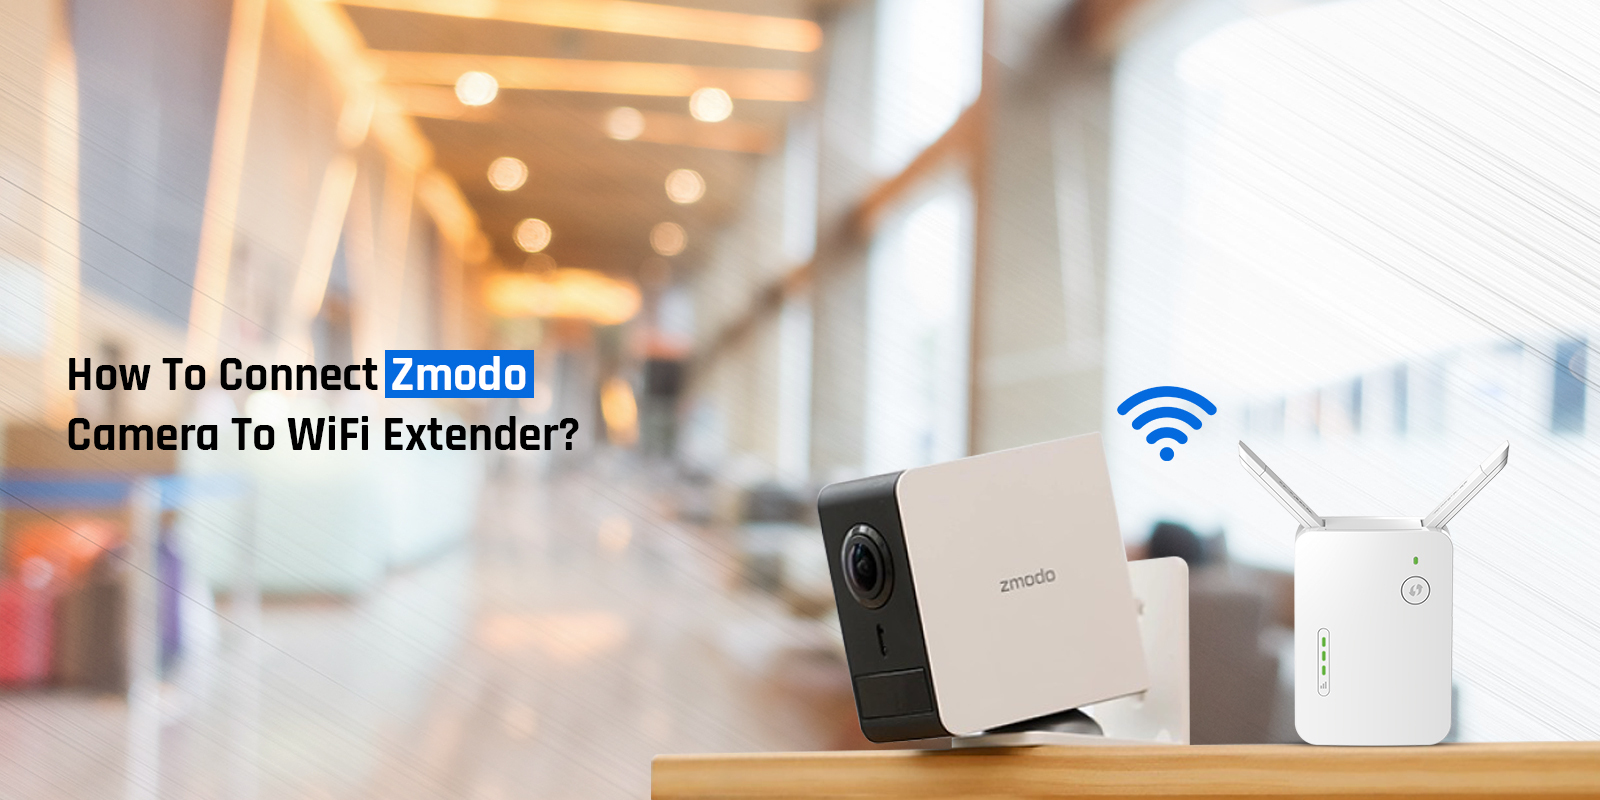 Connect Zmodo Camera to New WiFi